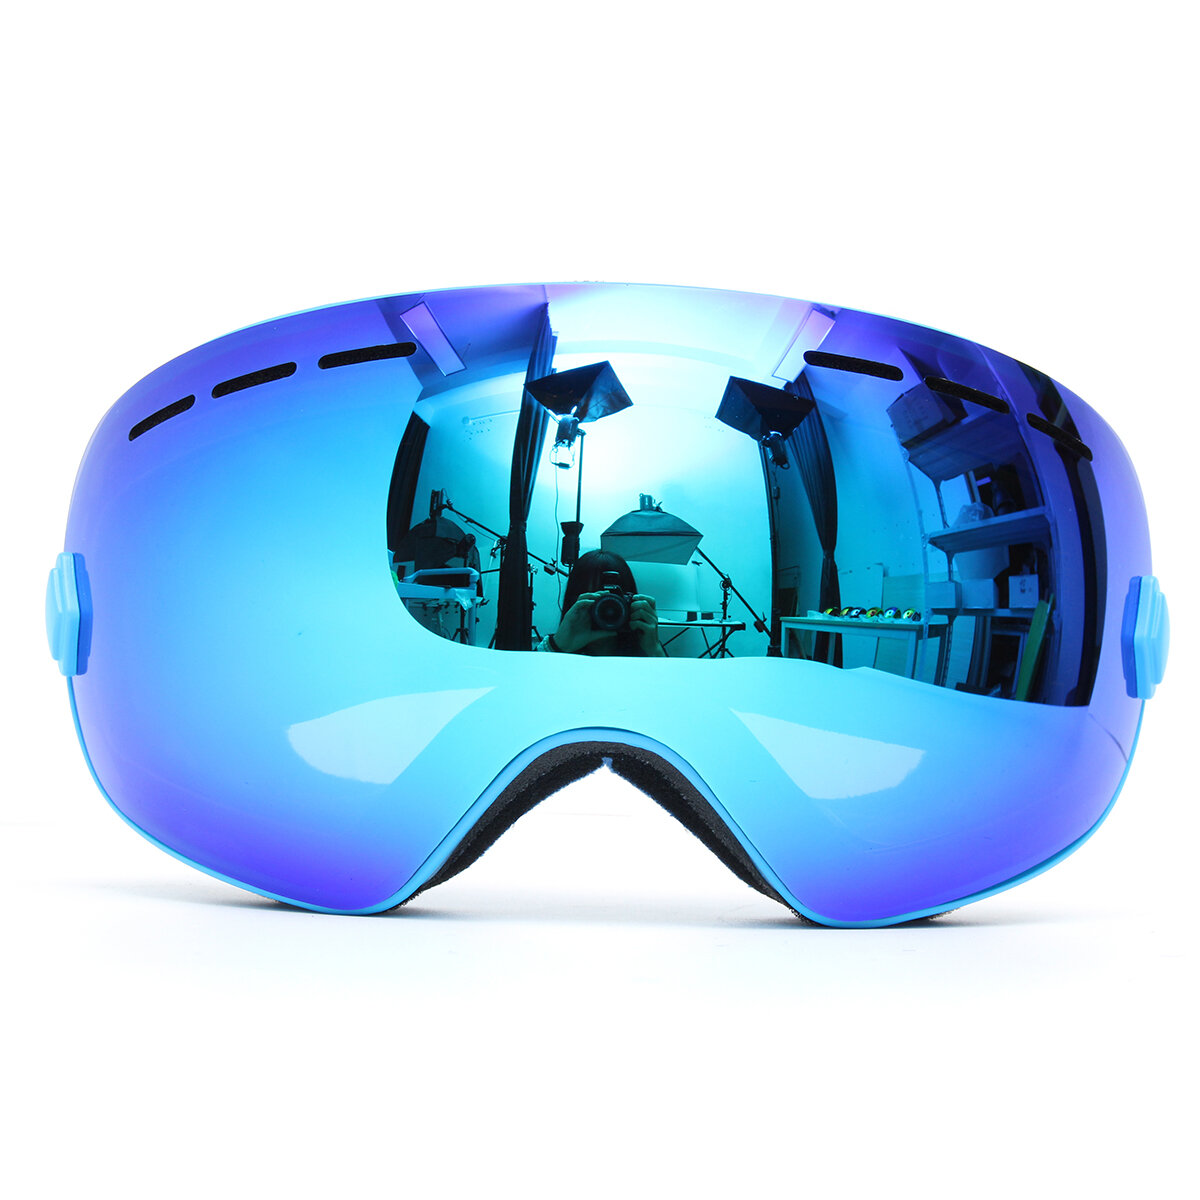 

Professional Skiing Motorcycle Snowboard Ski Goggles Anti Fog UV Double Lens Blue